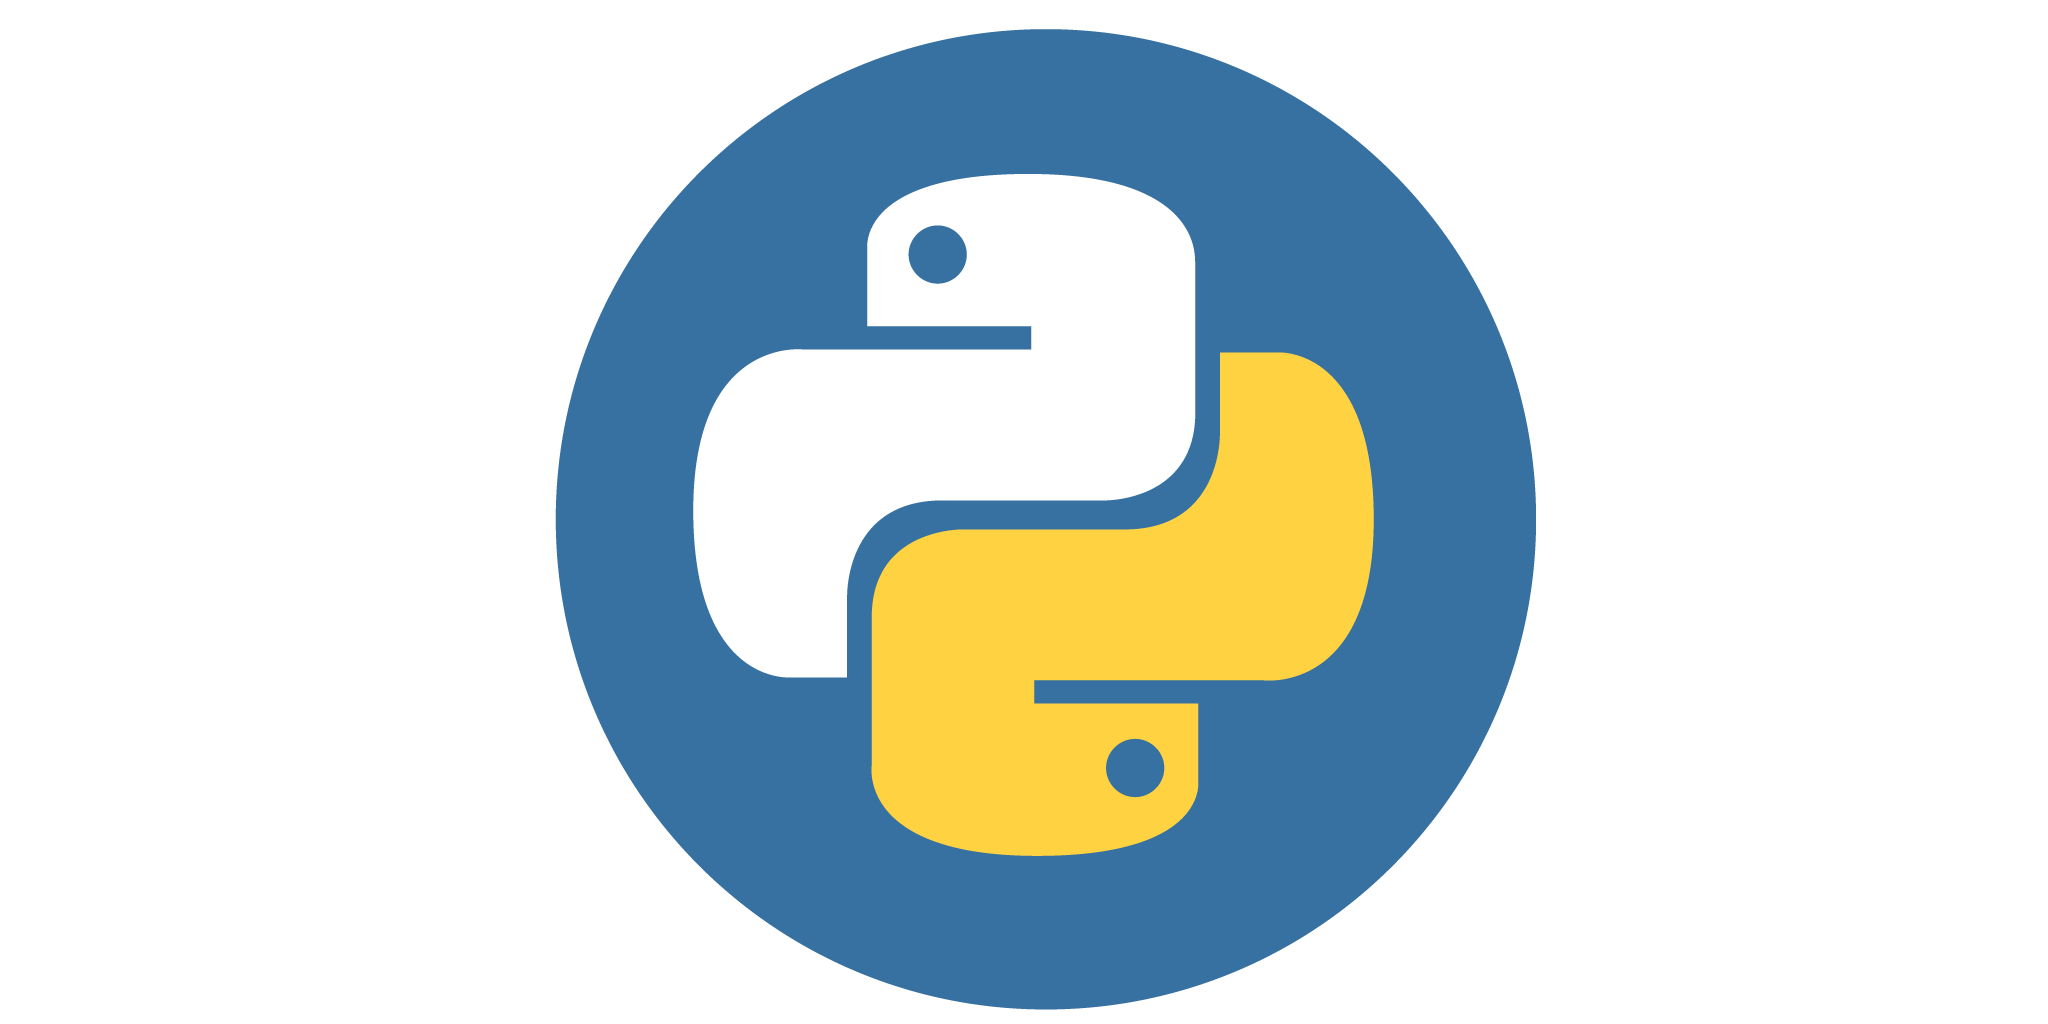 Python icon. Значок Python. Питон язык программирования логотип. Язык программирования pythonзначек. Иконки языков программирования питон.